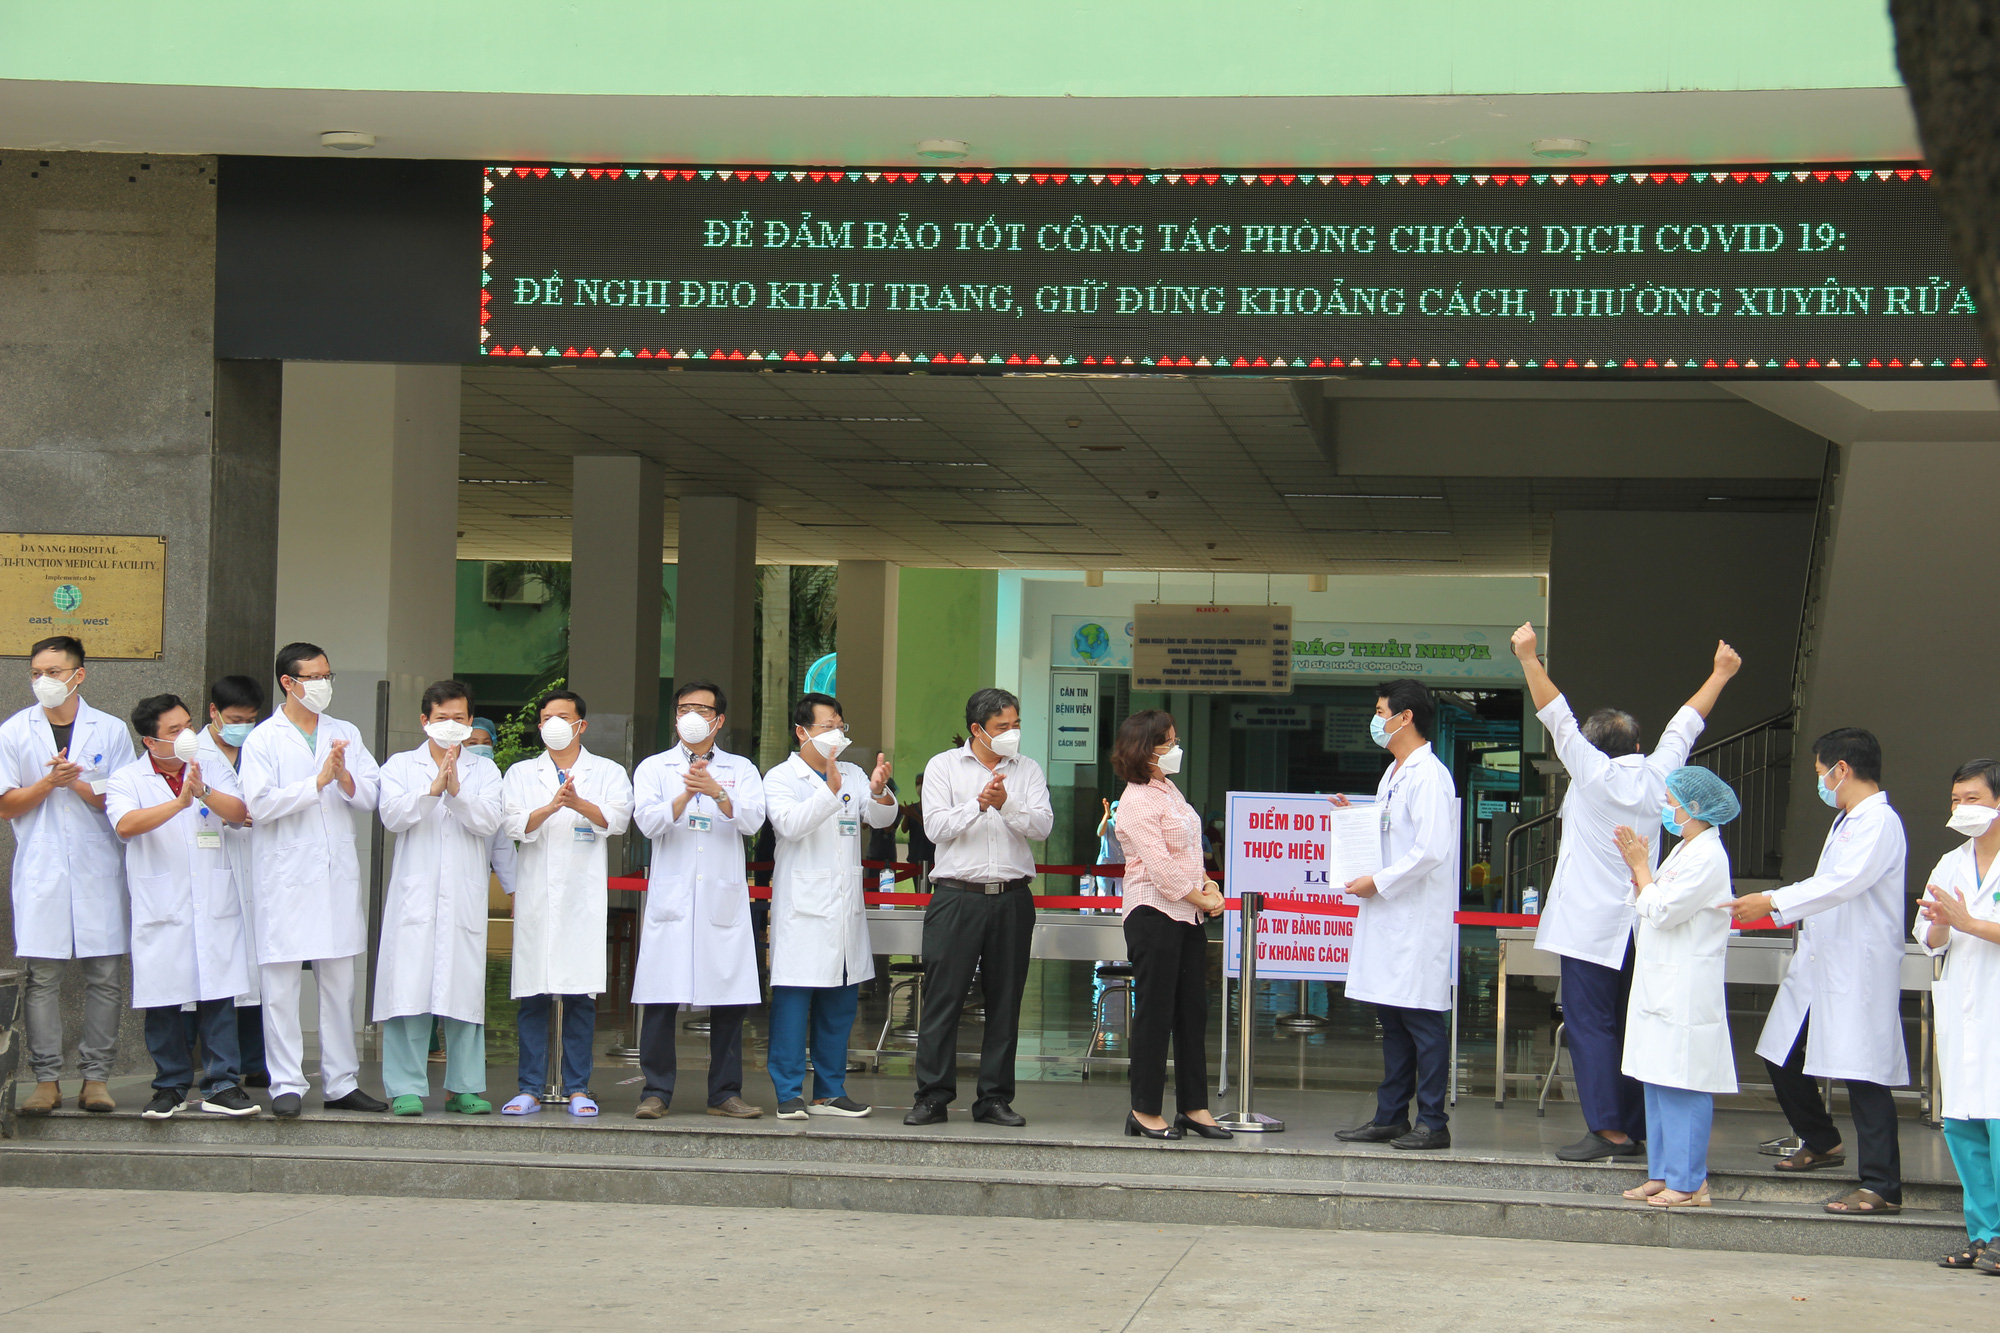 Da Nang lifts lockdown on major hospital as COVID-19 cluster under control